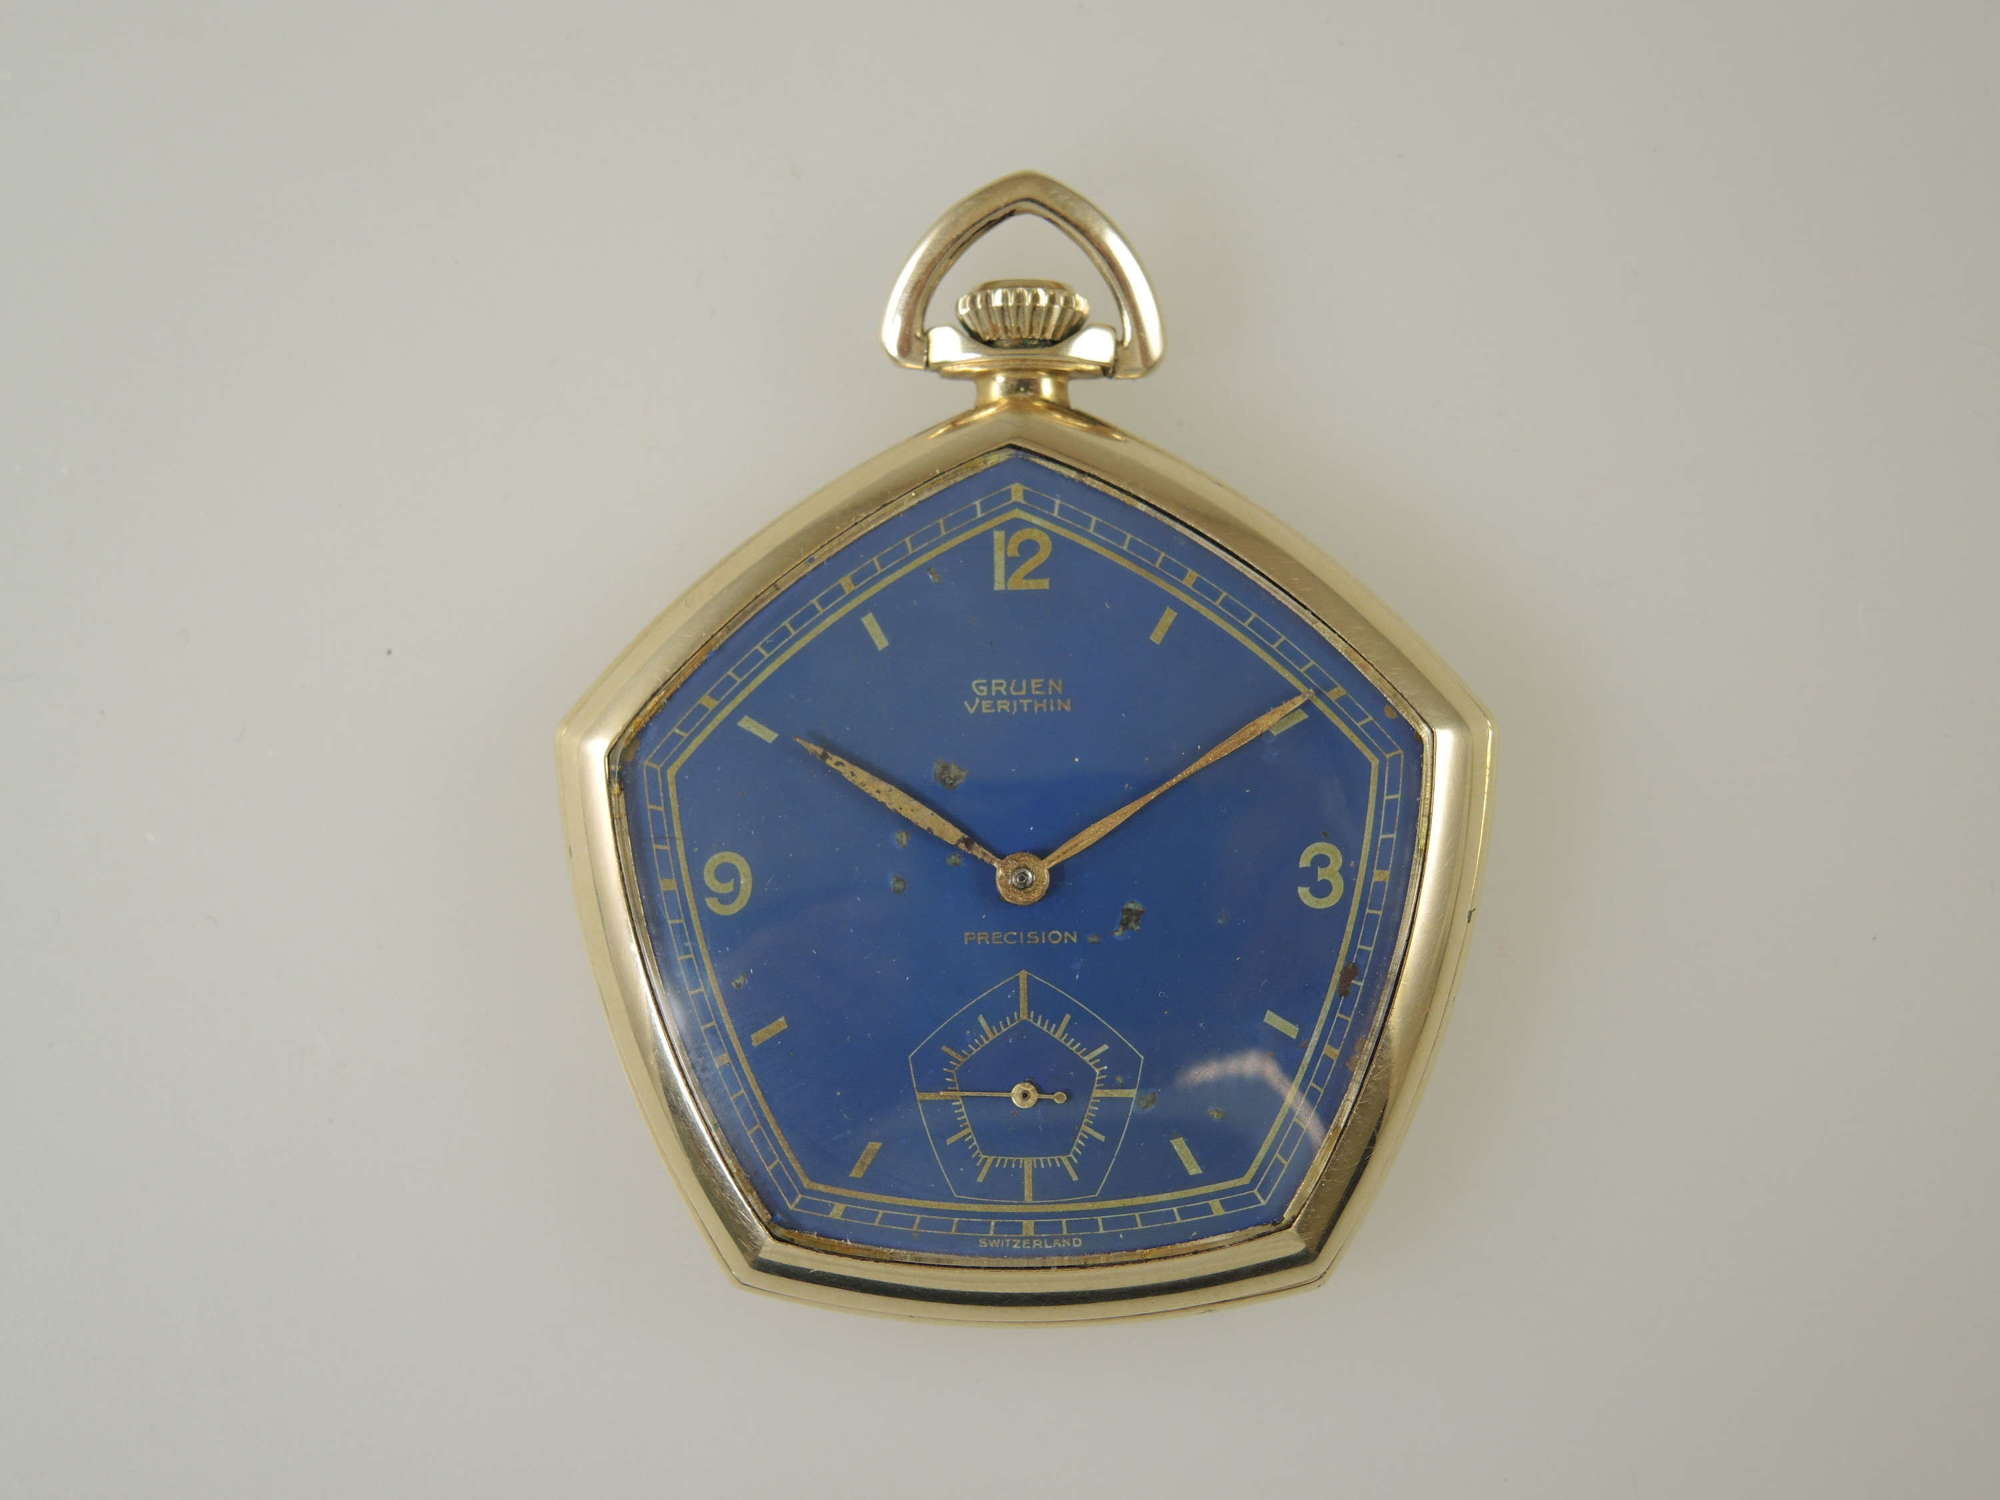 17 Jewel Gruen Veri Thin PENTAGON Cased pocket watch c1925